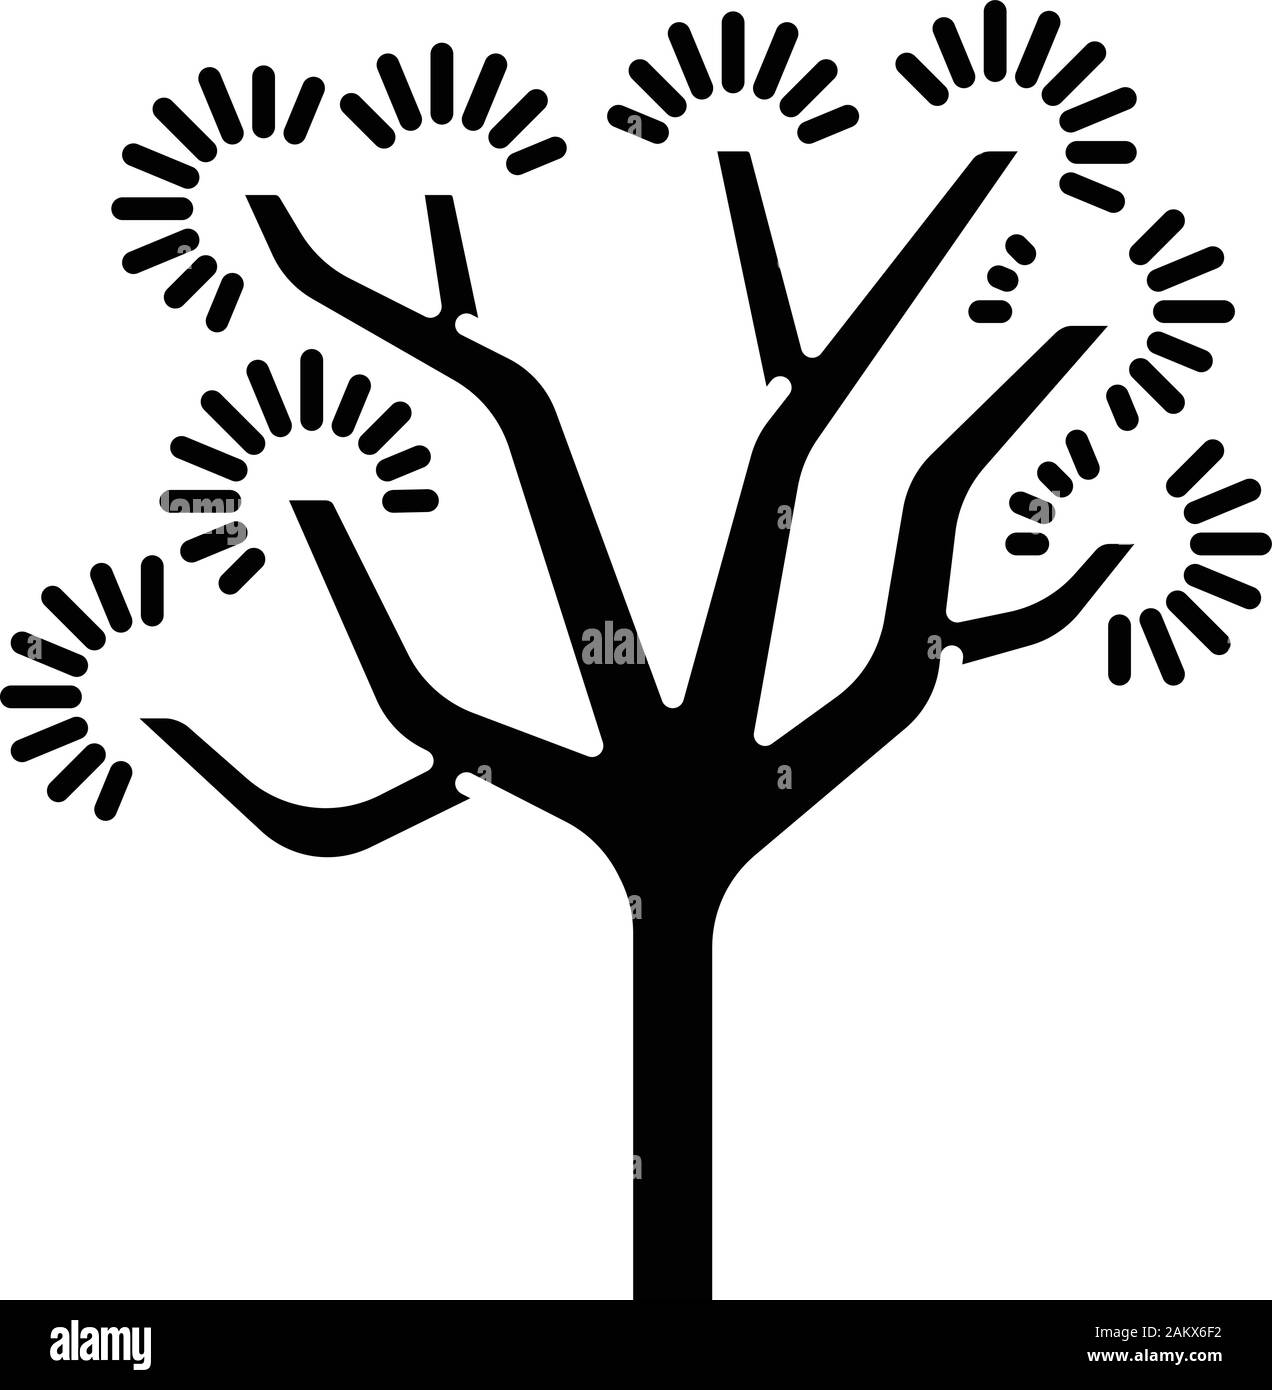 Joshua tree glyph icon. Yucca brevifolia. Desert plant. Palm tree yucca.  Silhouette symbol. Negative space. Vector isolated illustration Stock Vector